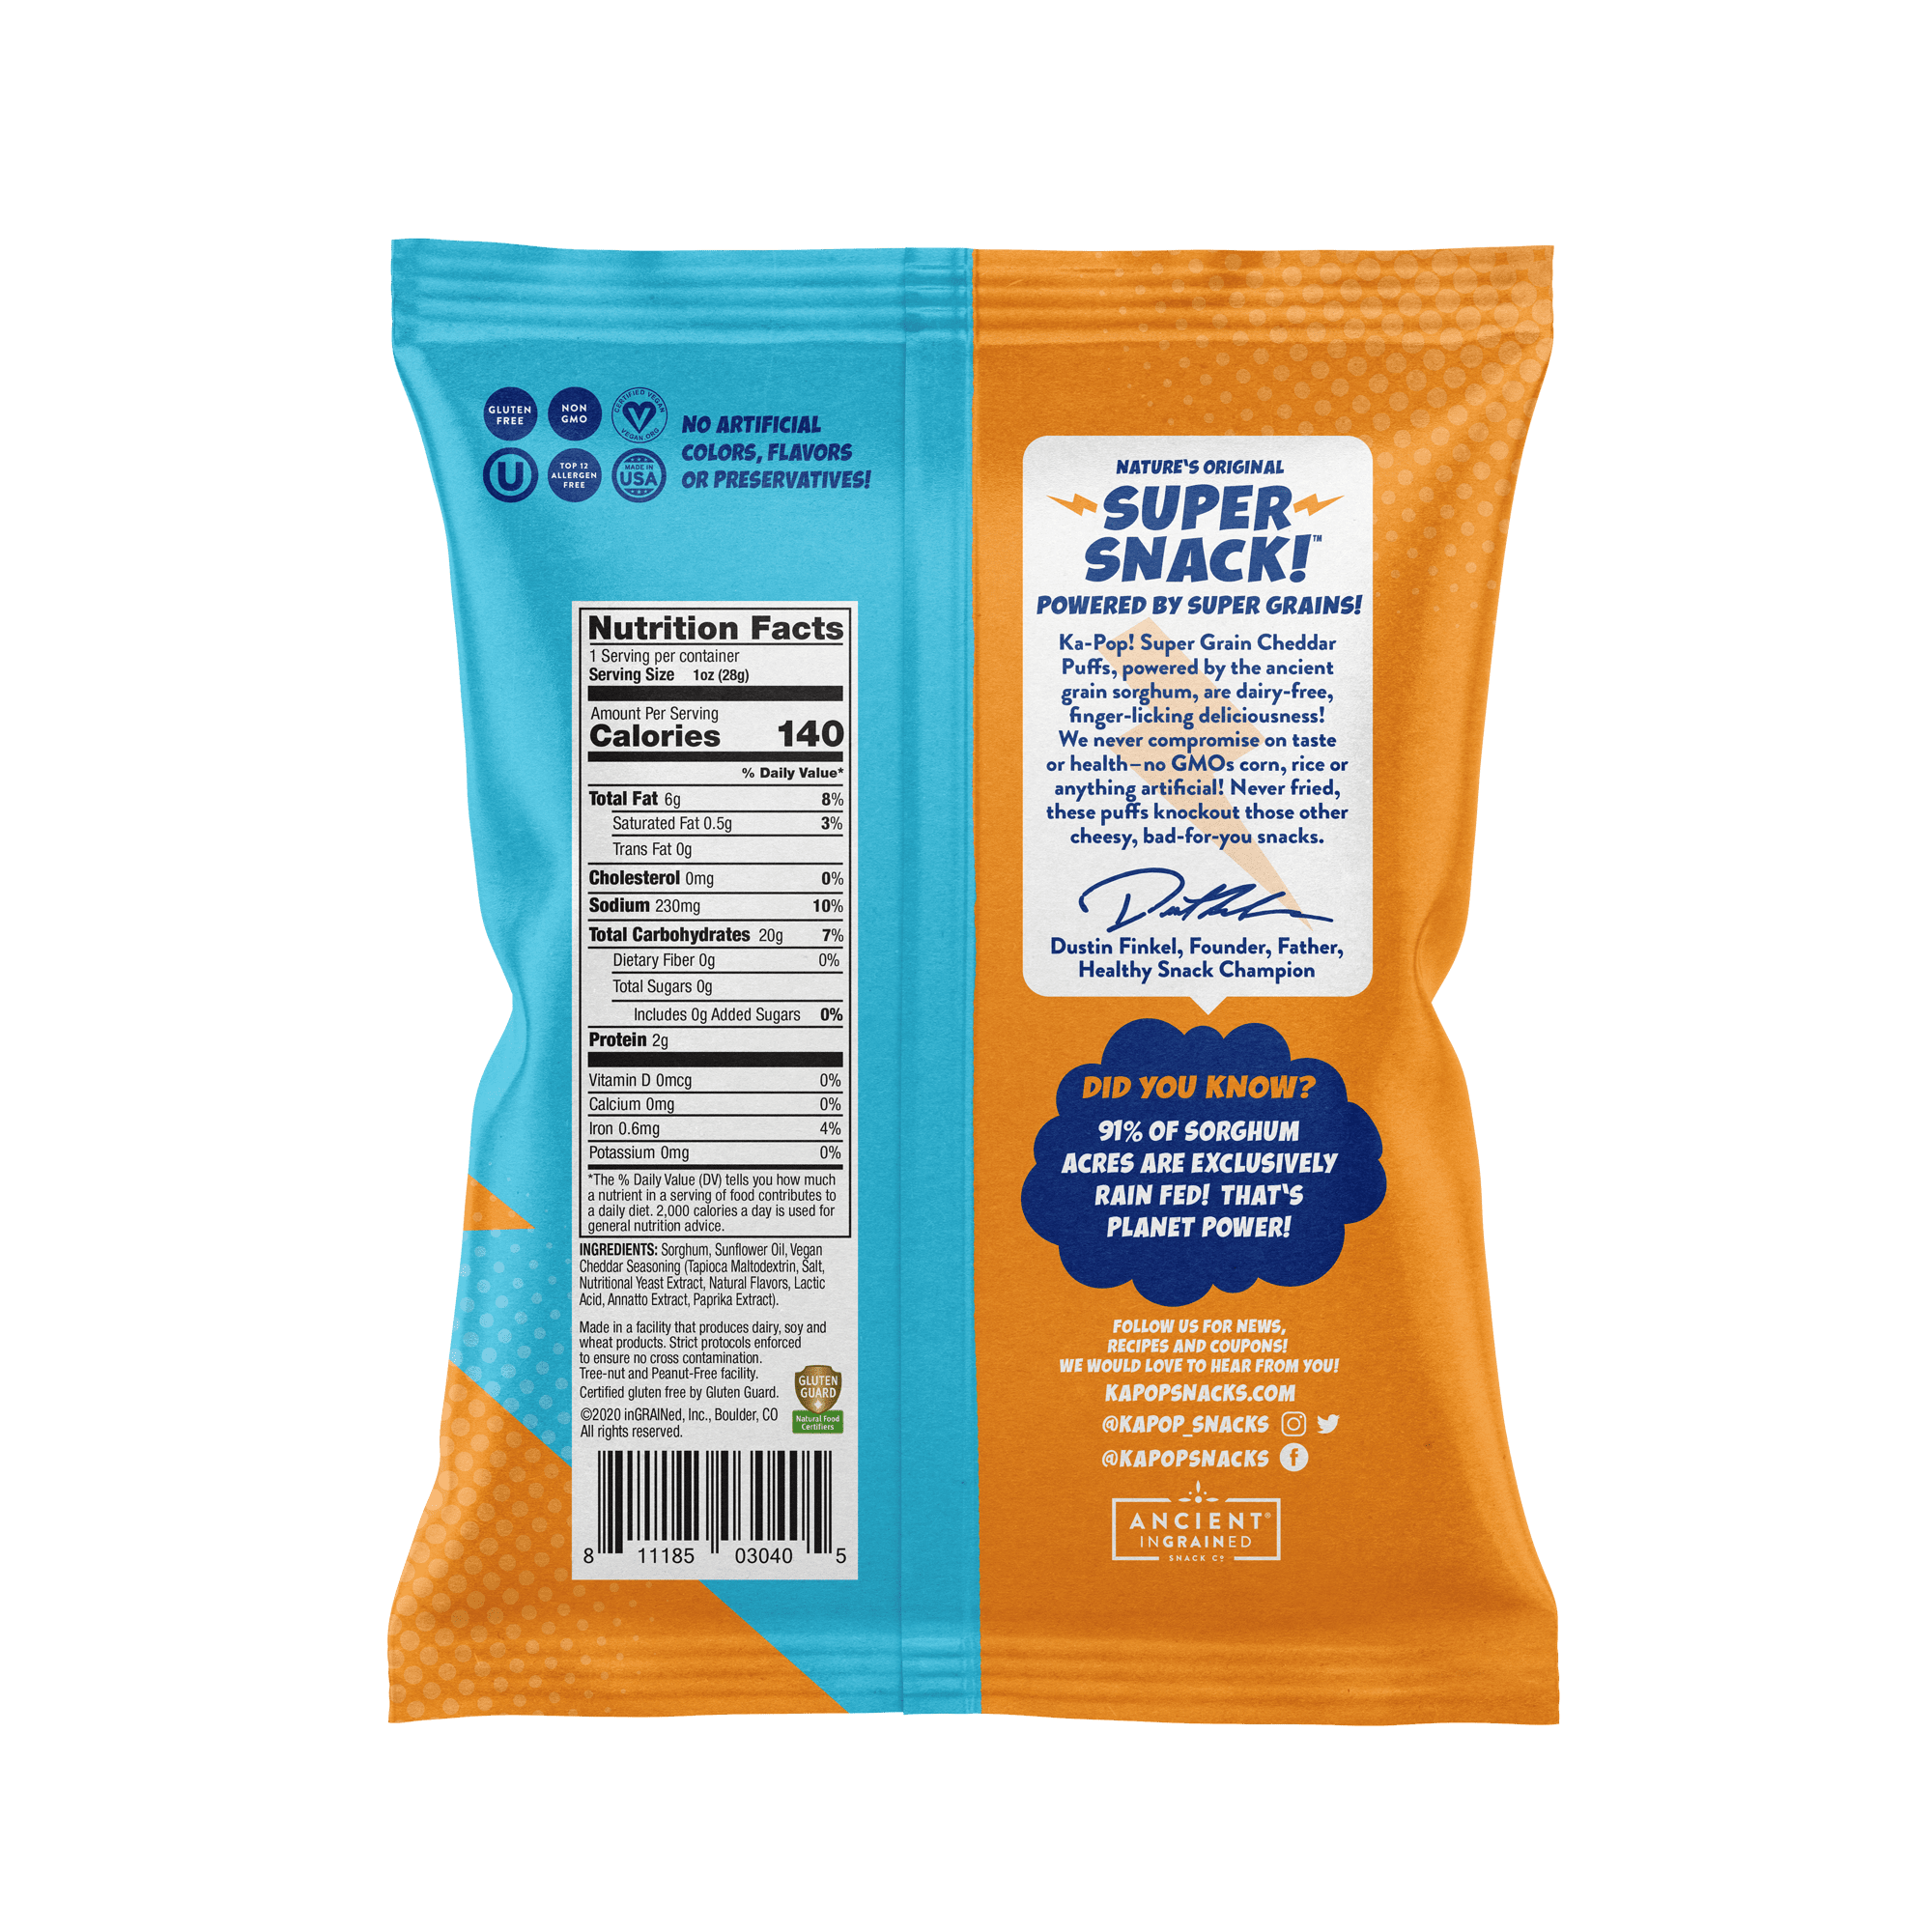 Ka-Pop! Vegan Cheddar Puffs 24 units per case 1.0 oz